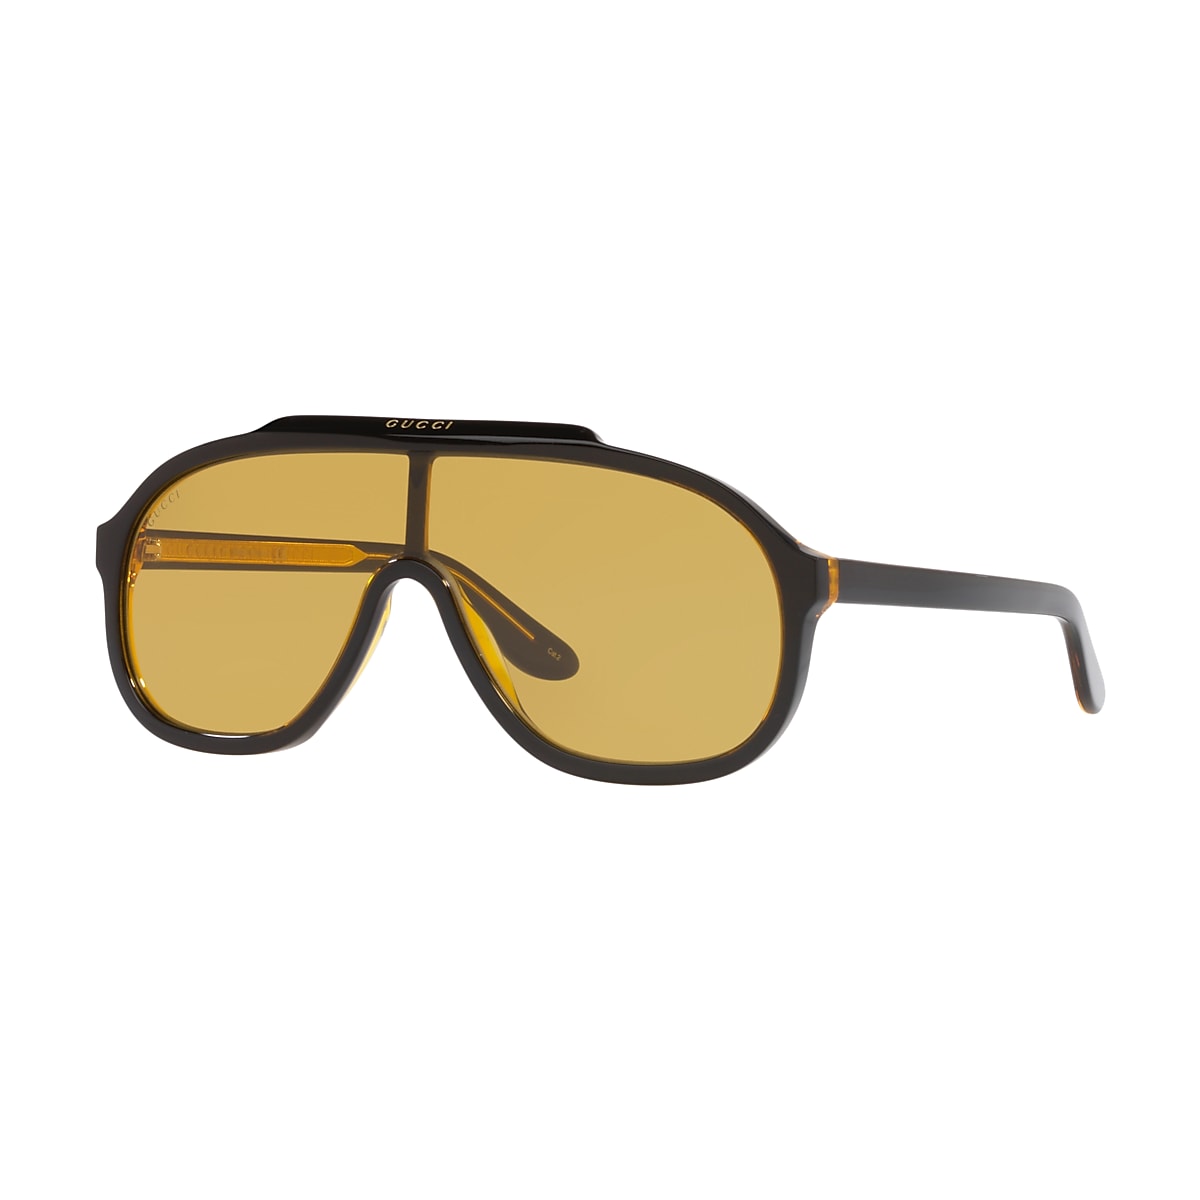 Top 46+ imagen gucci sunglasses yellow